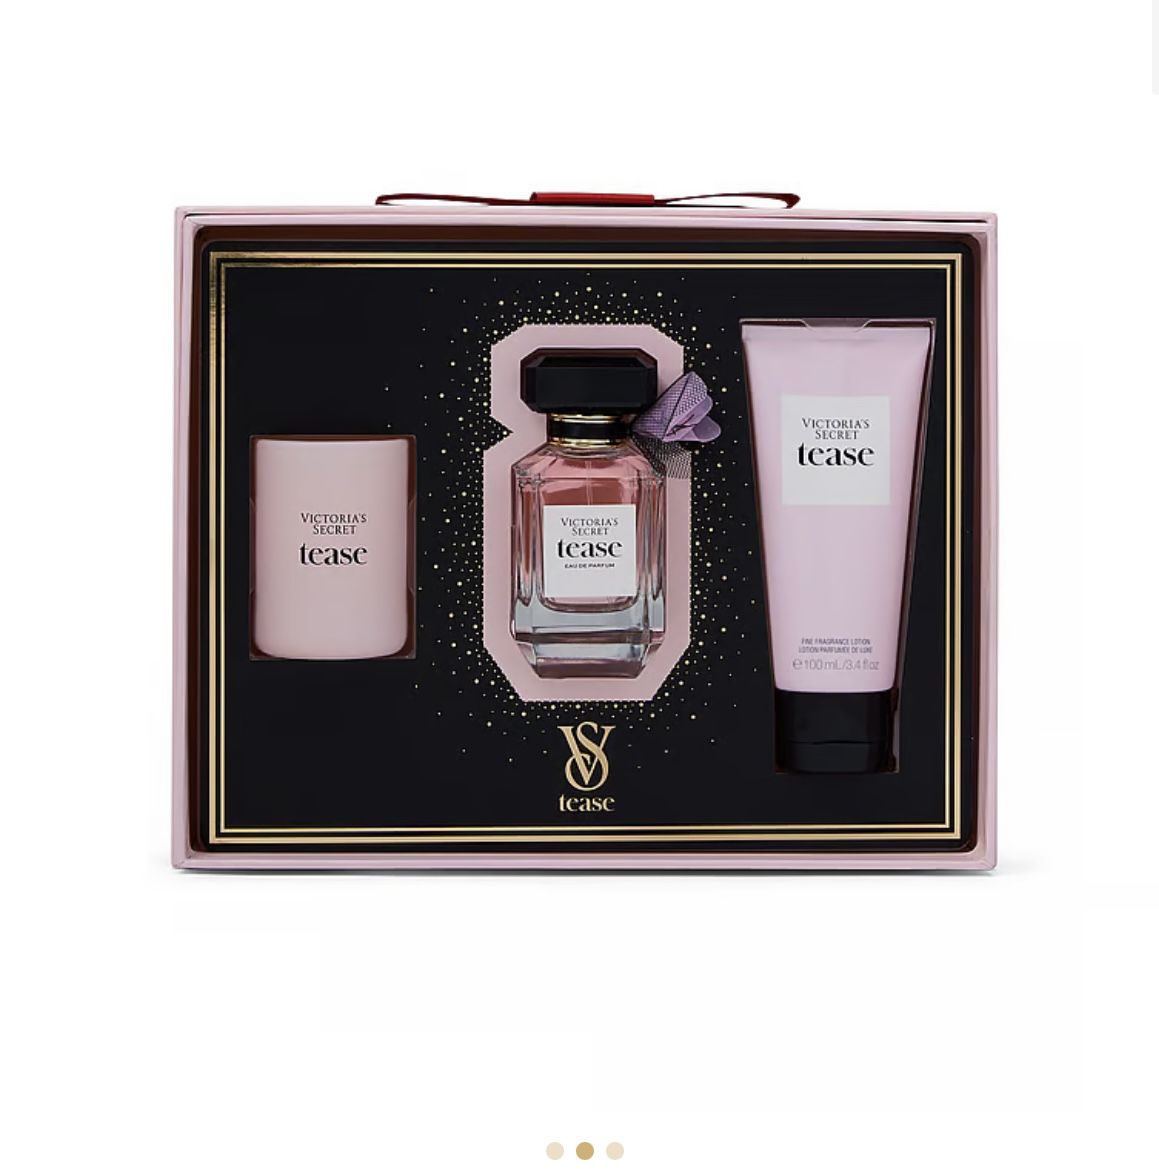 This perfume set for Women